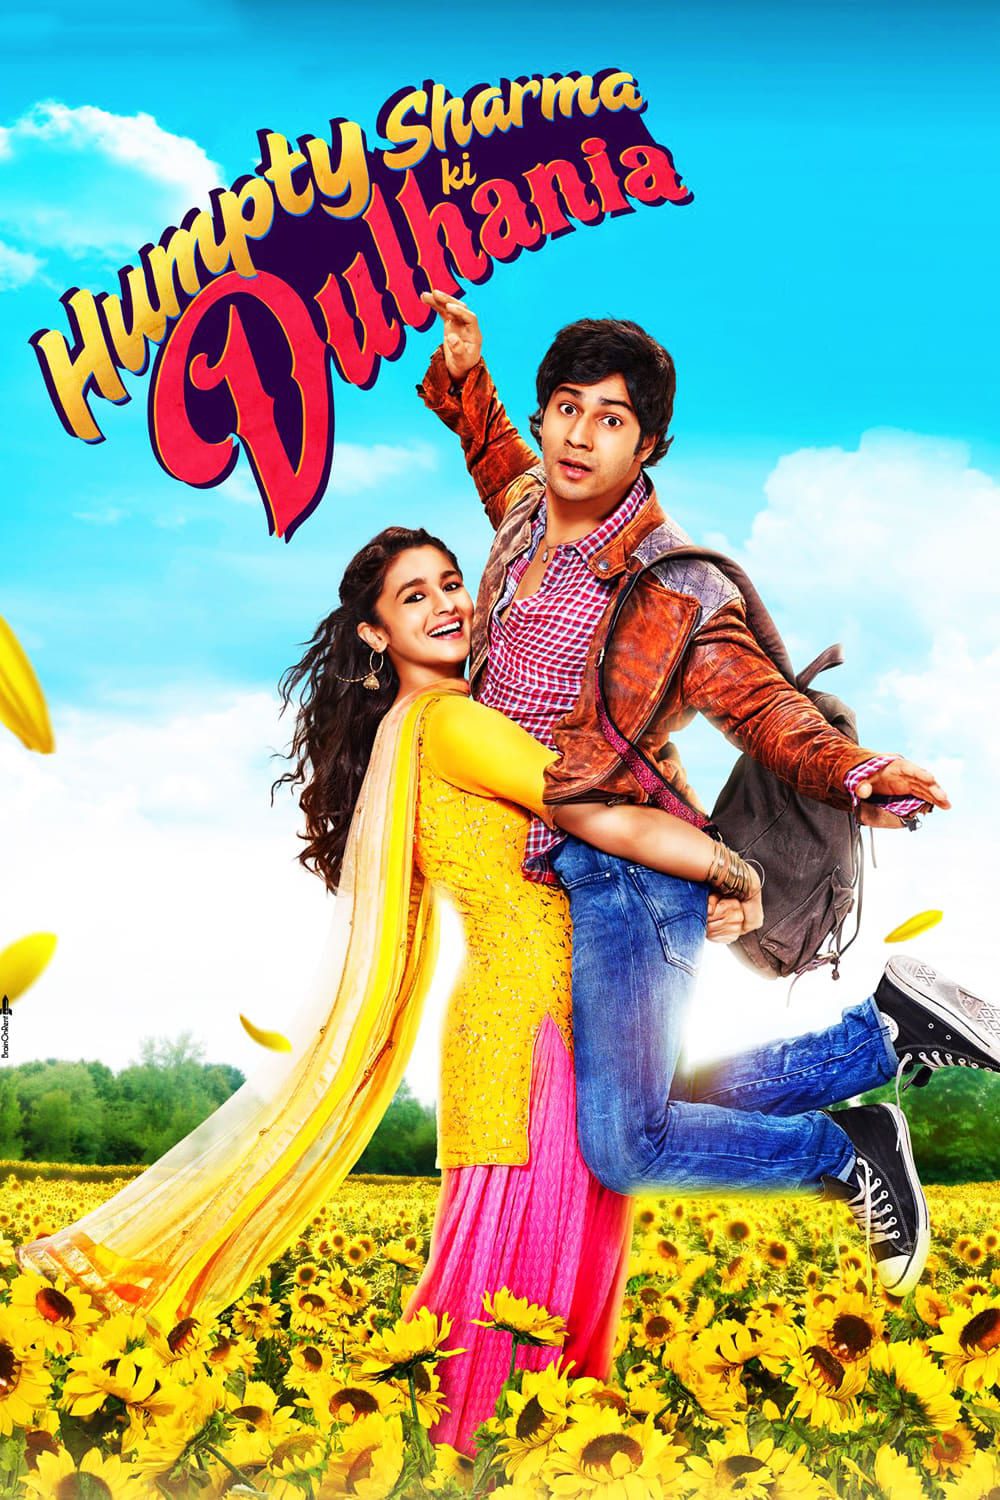 Poster for the movie "Humpty Sharma Ki Dulhania"